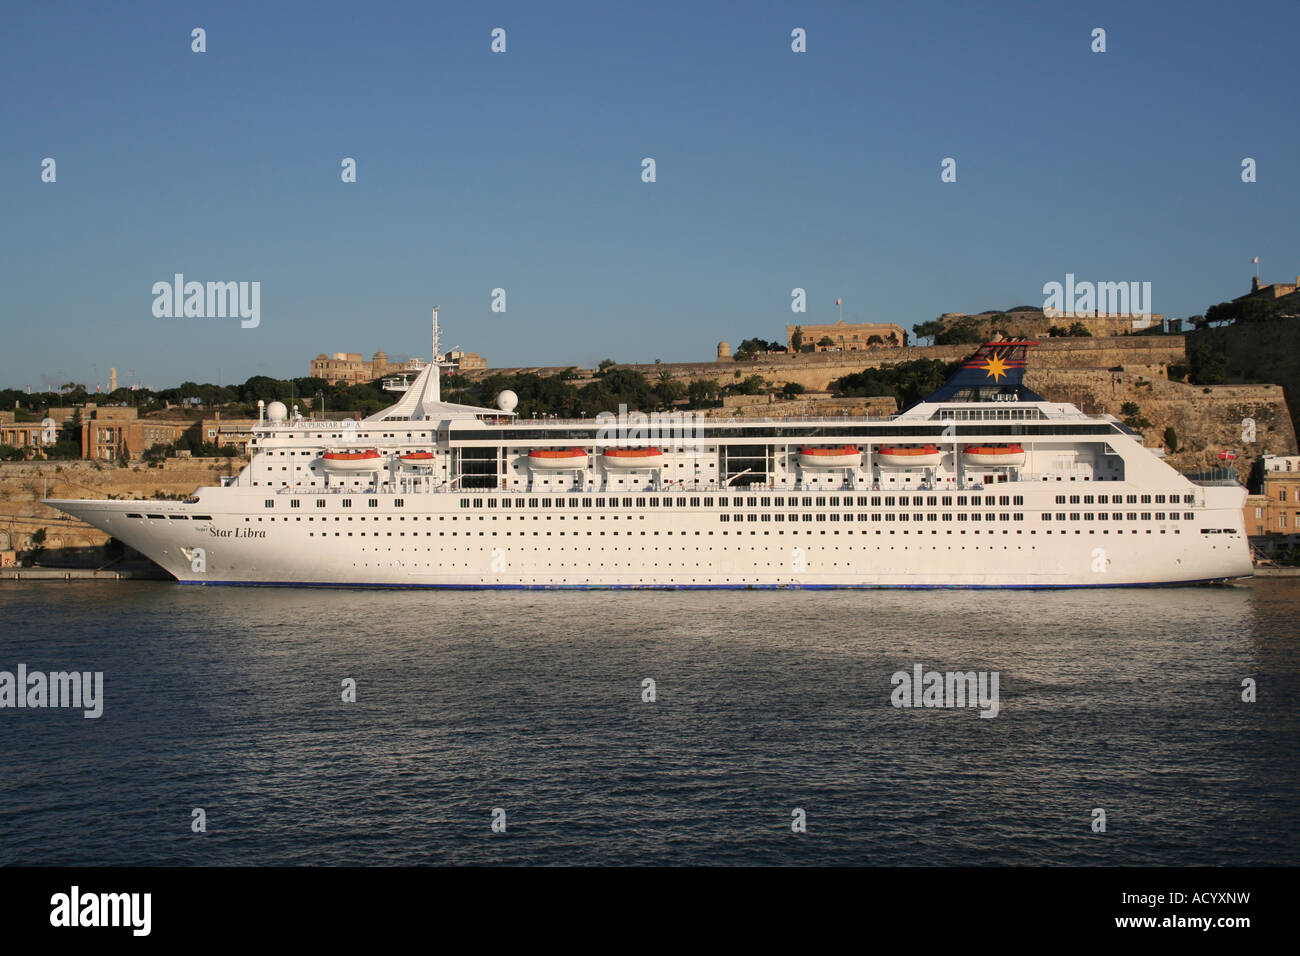 The cruise ship Superstar Libra in Malta Stock Photo